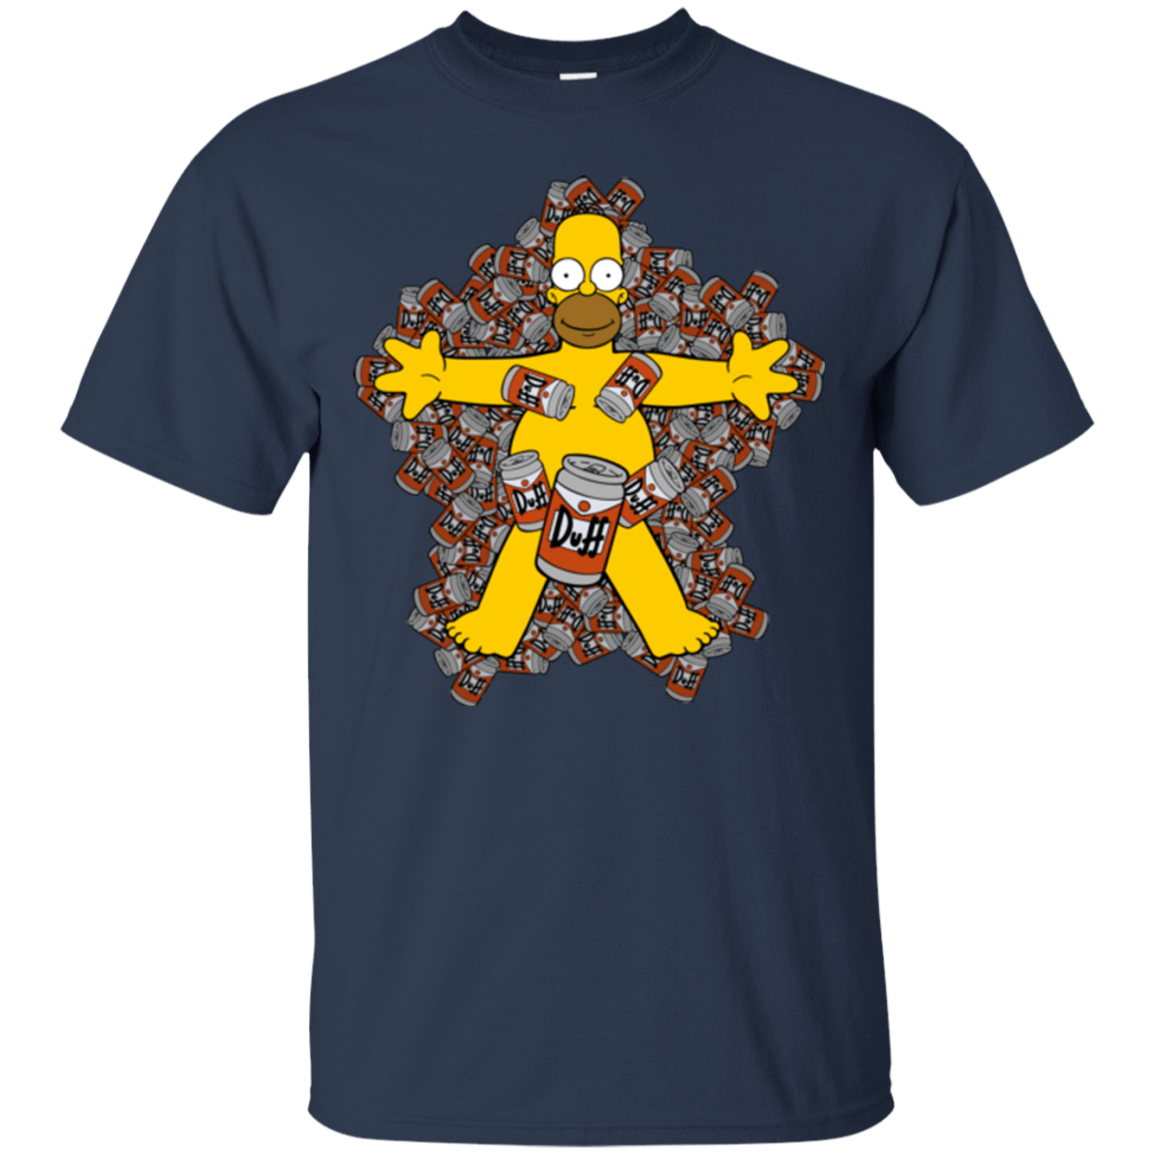 T-Shirts Navy / Small American Duff T-Shirt